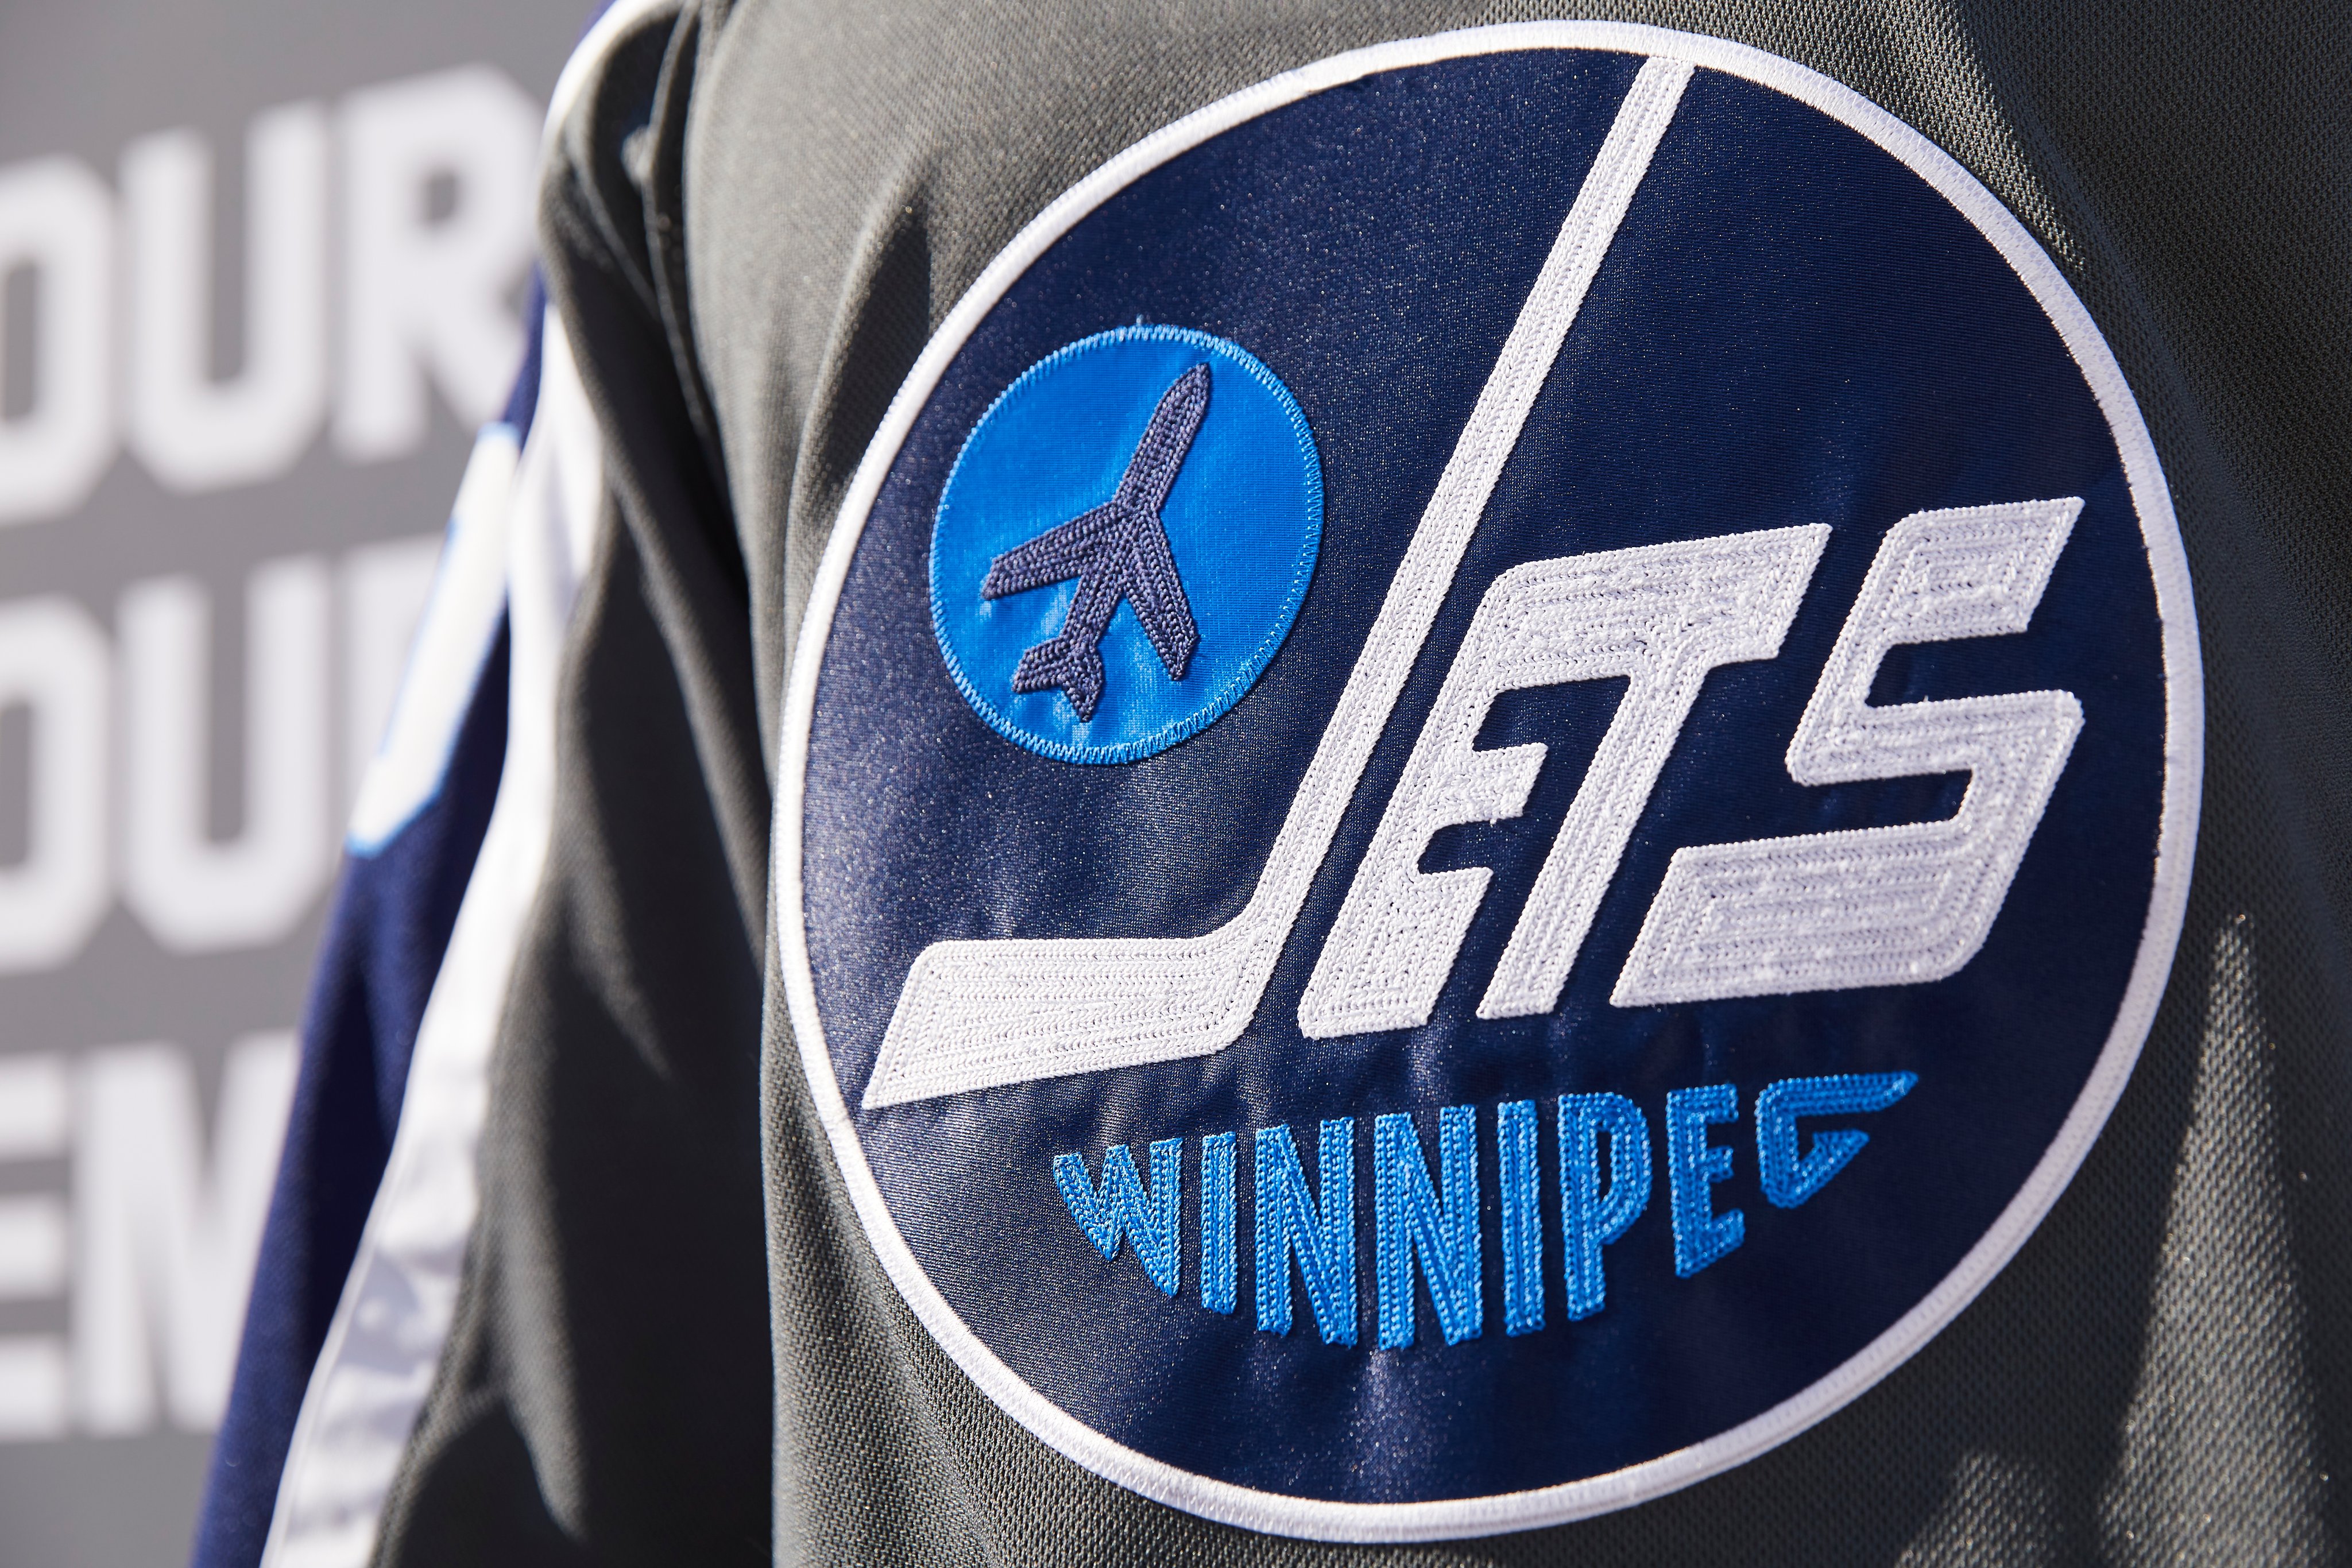 winnipeg jets original jersey